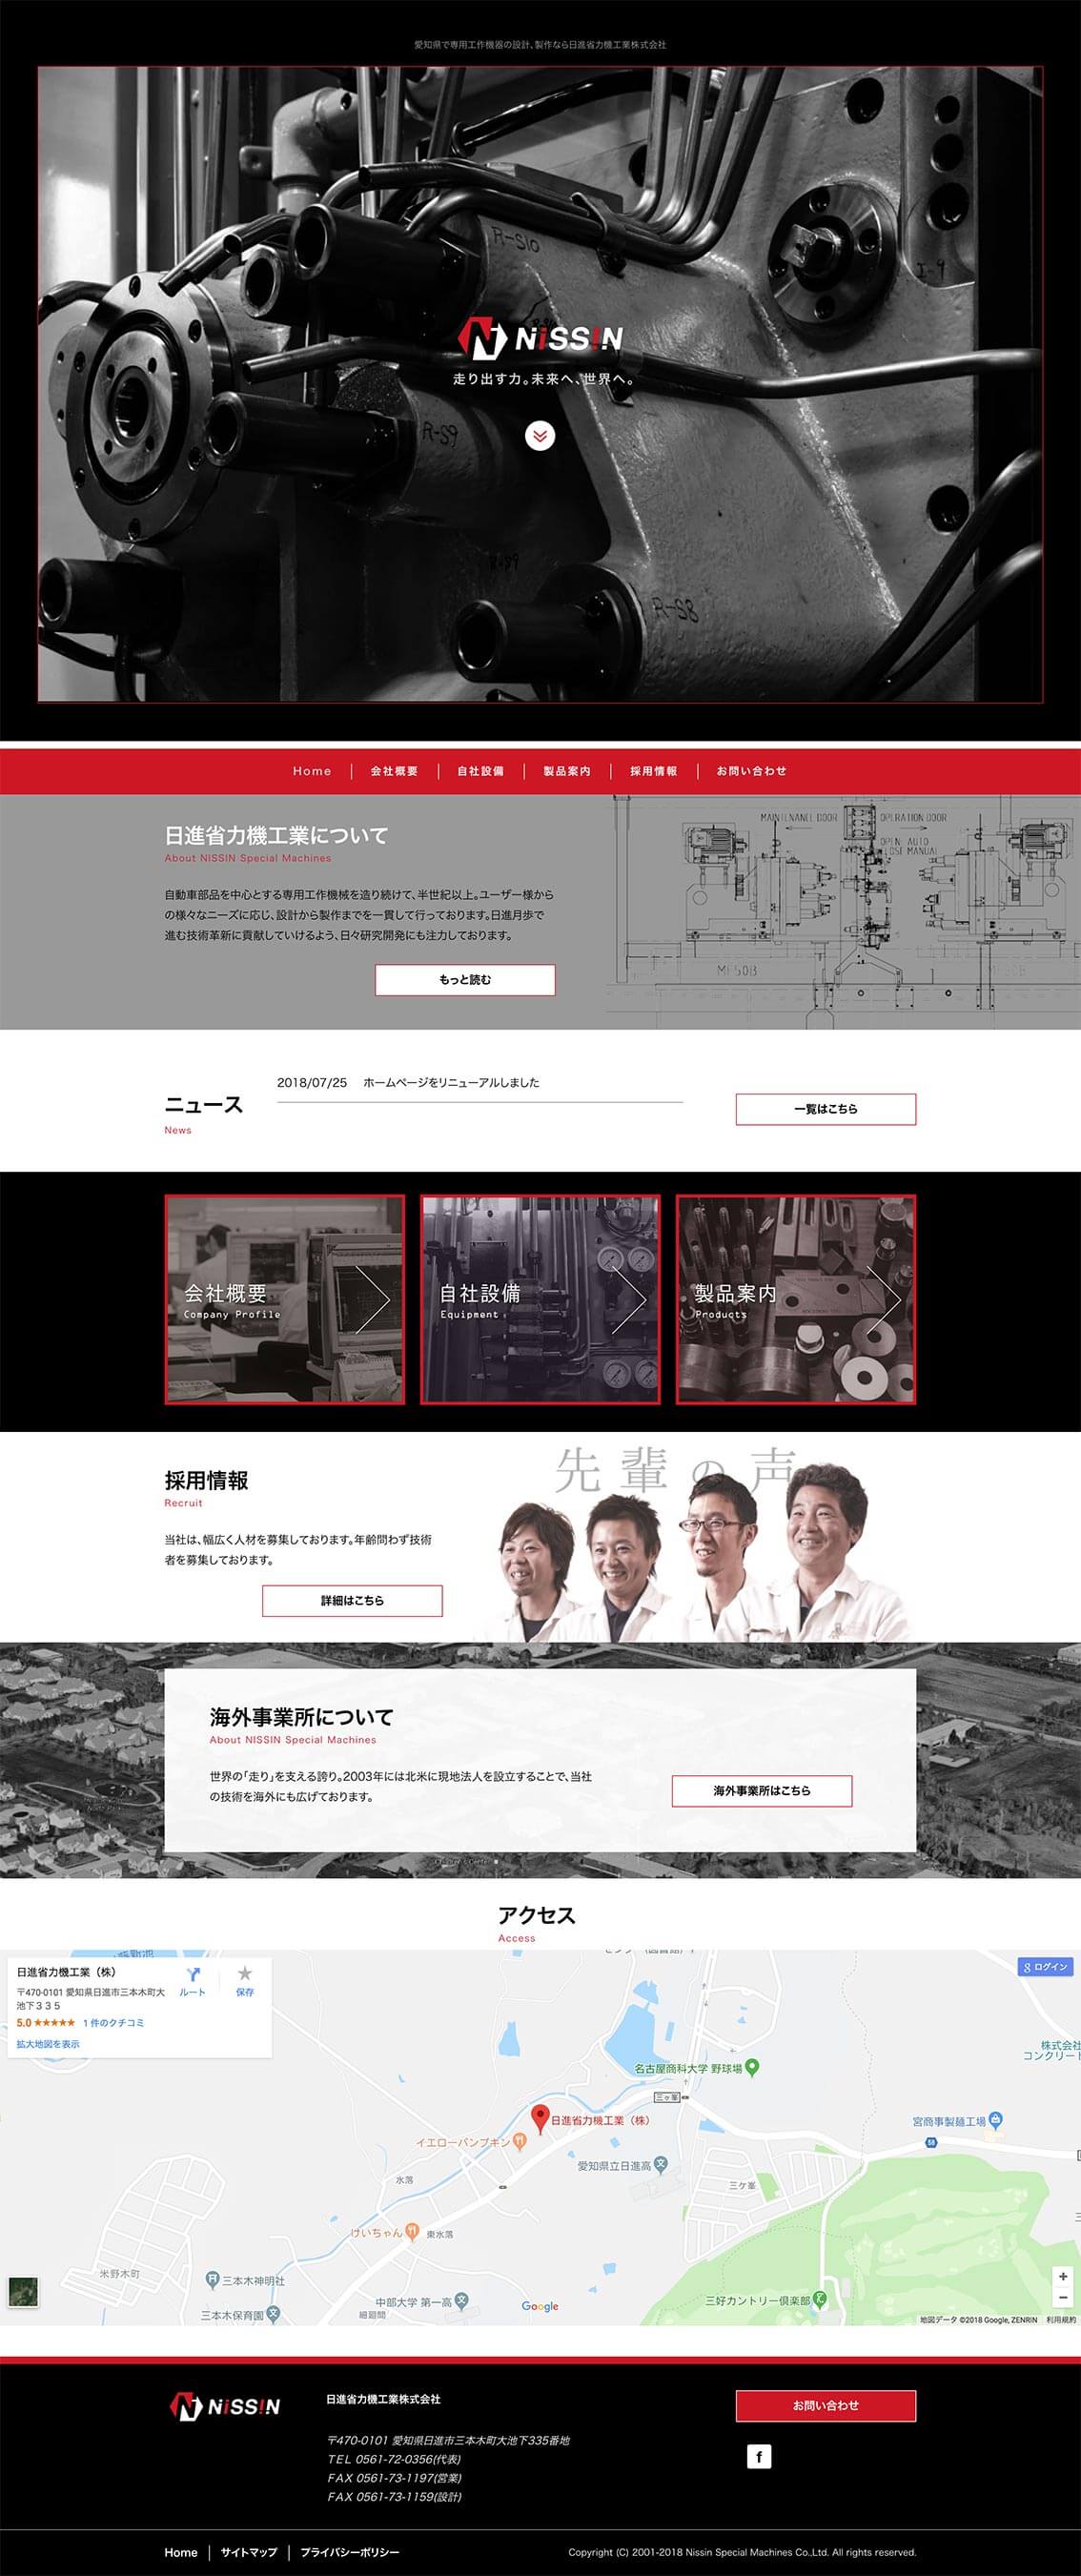  日進省力機工業株式会社様のPCサイト画像